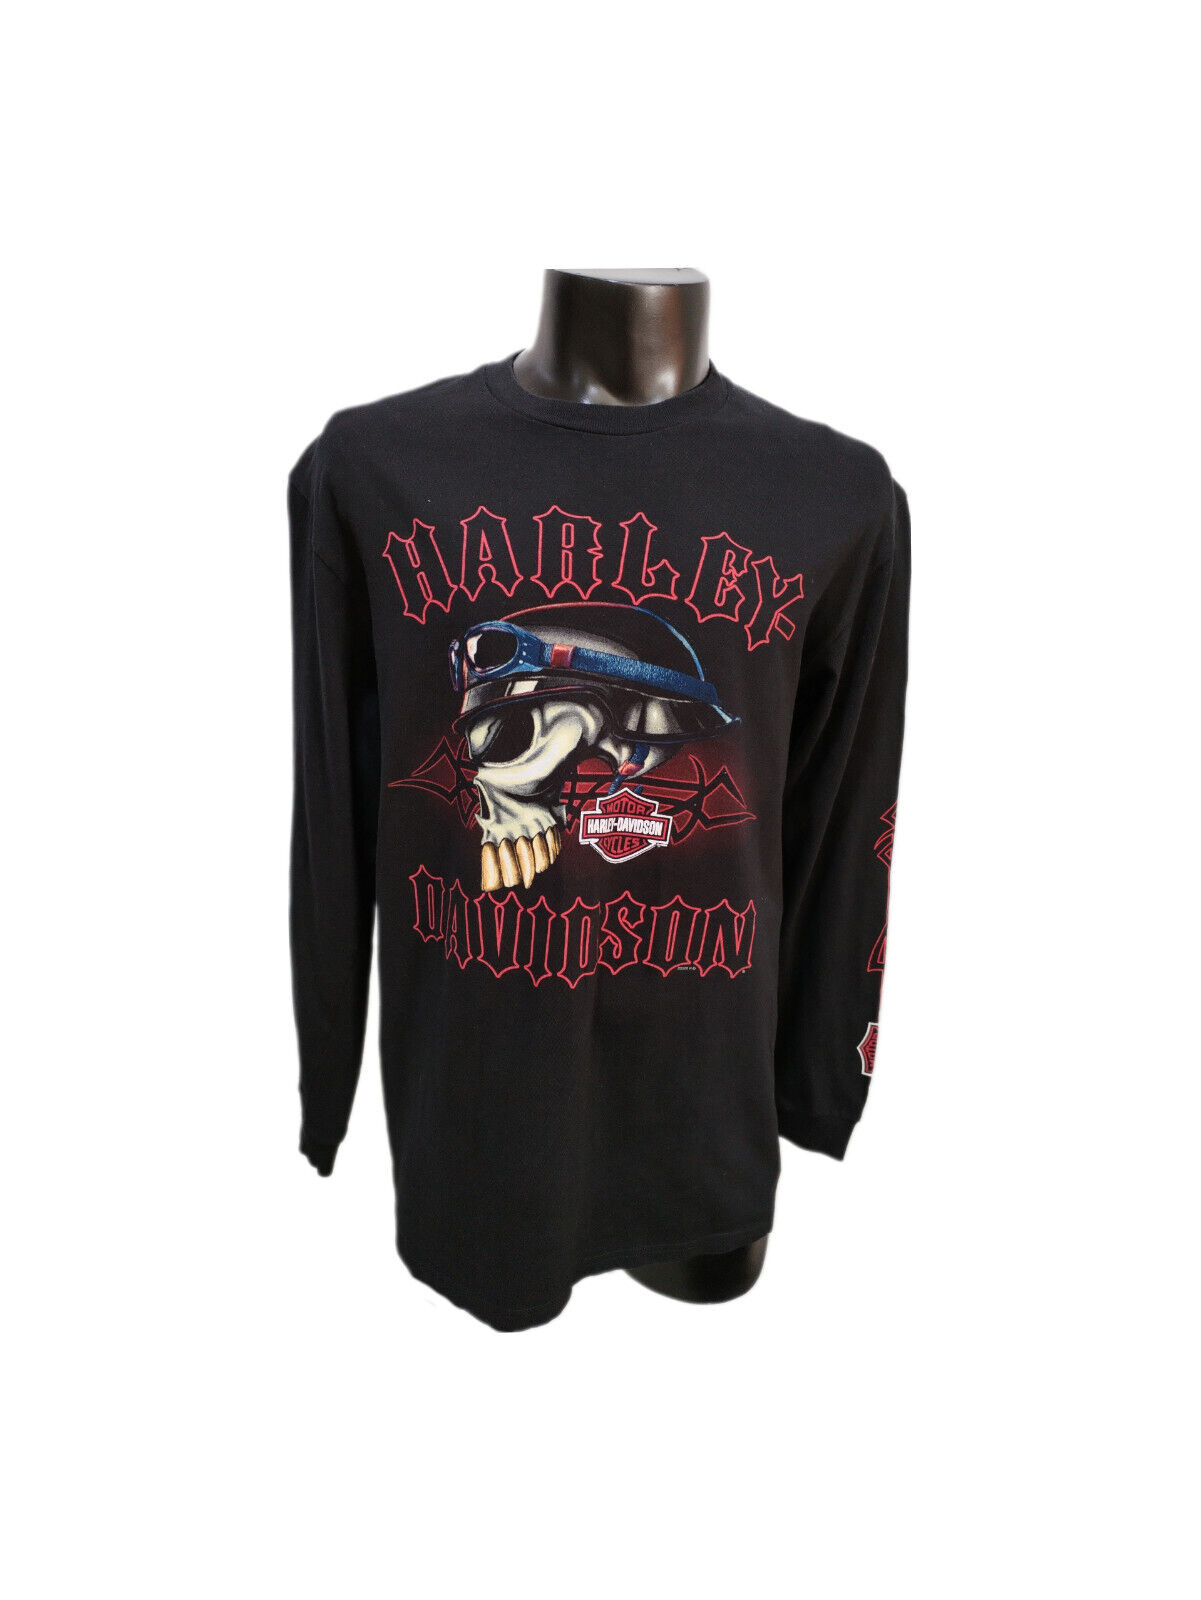 Harley Davidson Shirt Men's Skull  Black Size L